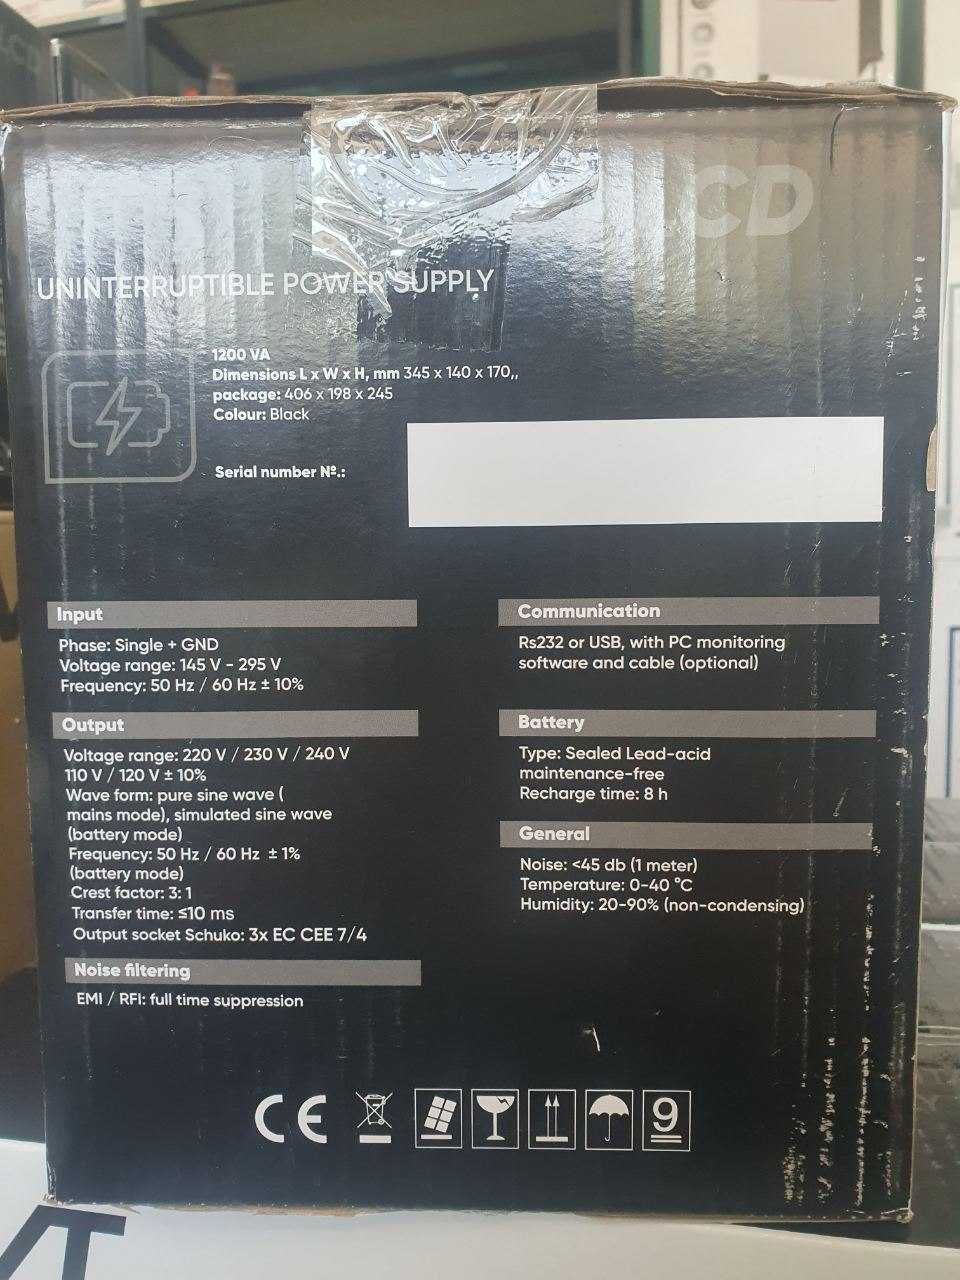 источник бесперебойного электропитания UPS AVT SMART 1500 LCD AVR